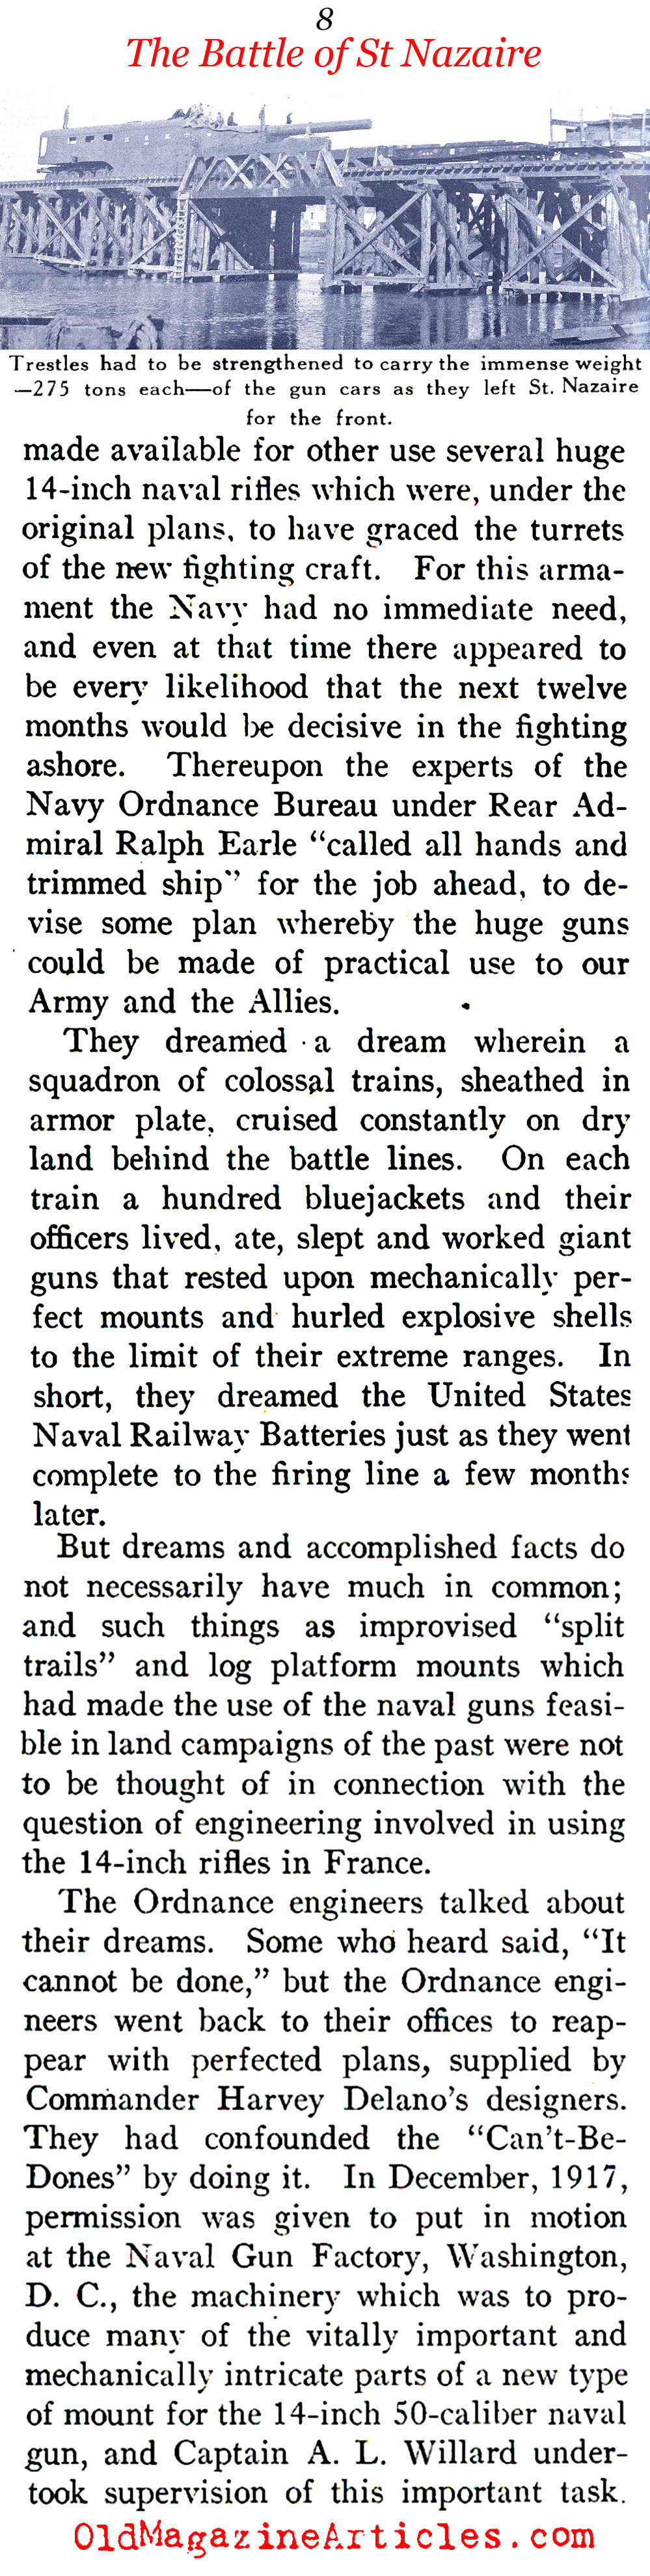 Firing from the Rails (Sea Power Magazine, 1918)